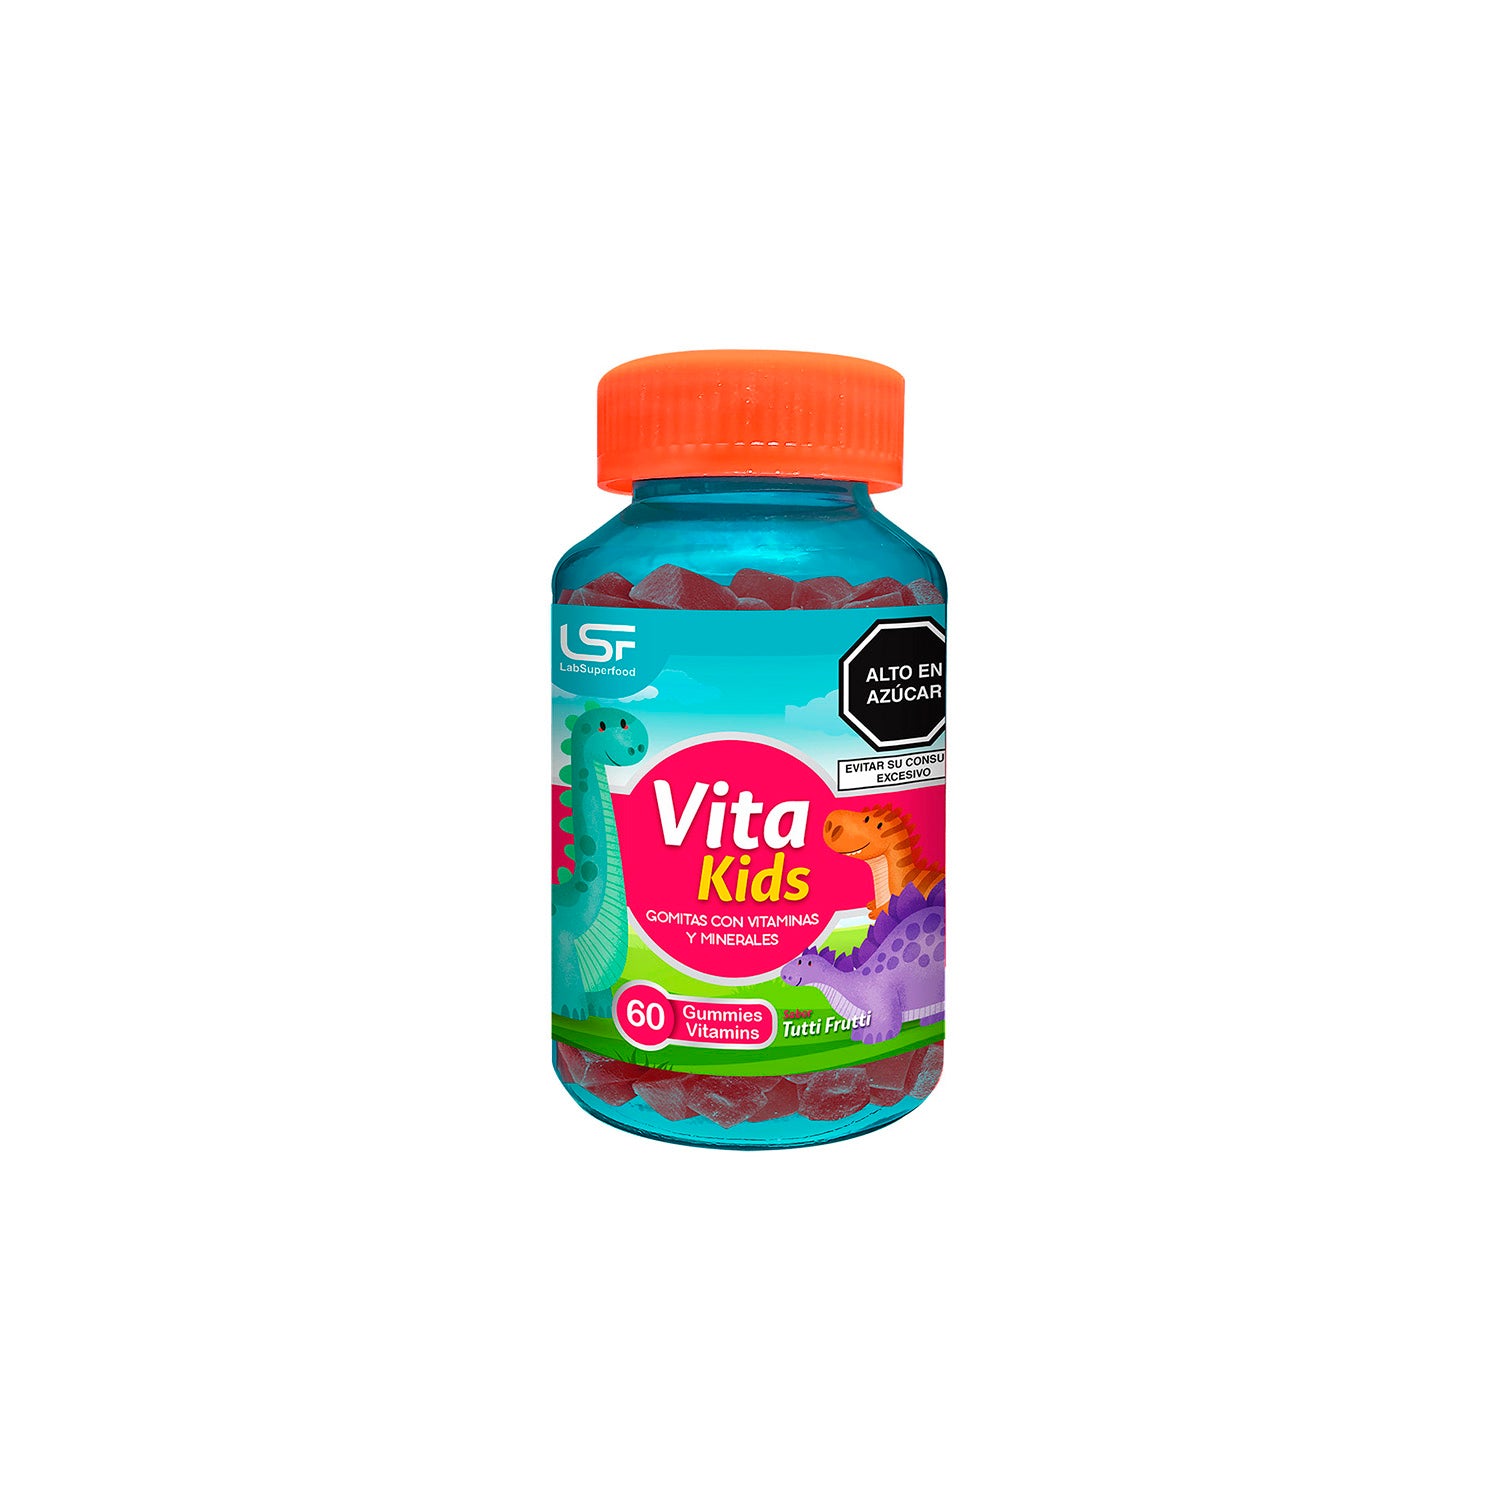 Vita Kids - Tutti Frutti Flavor - 60 gummies